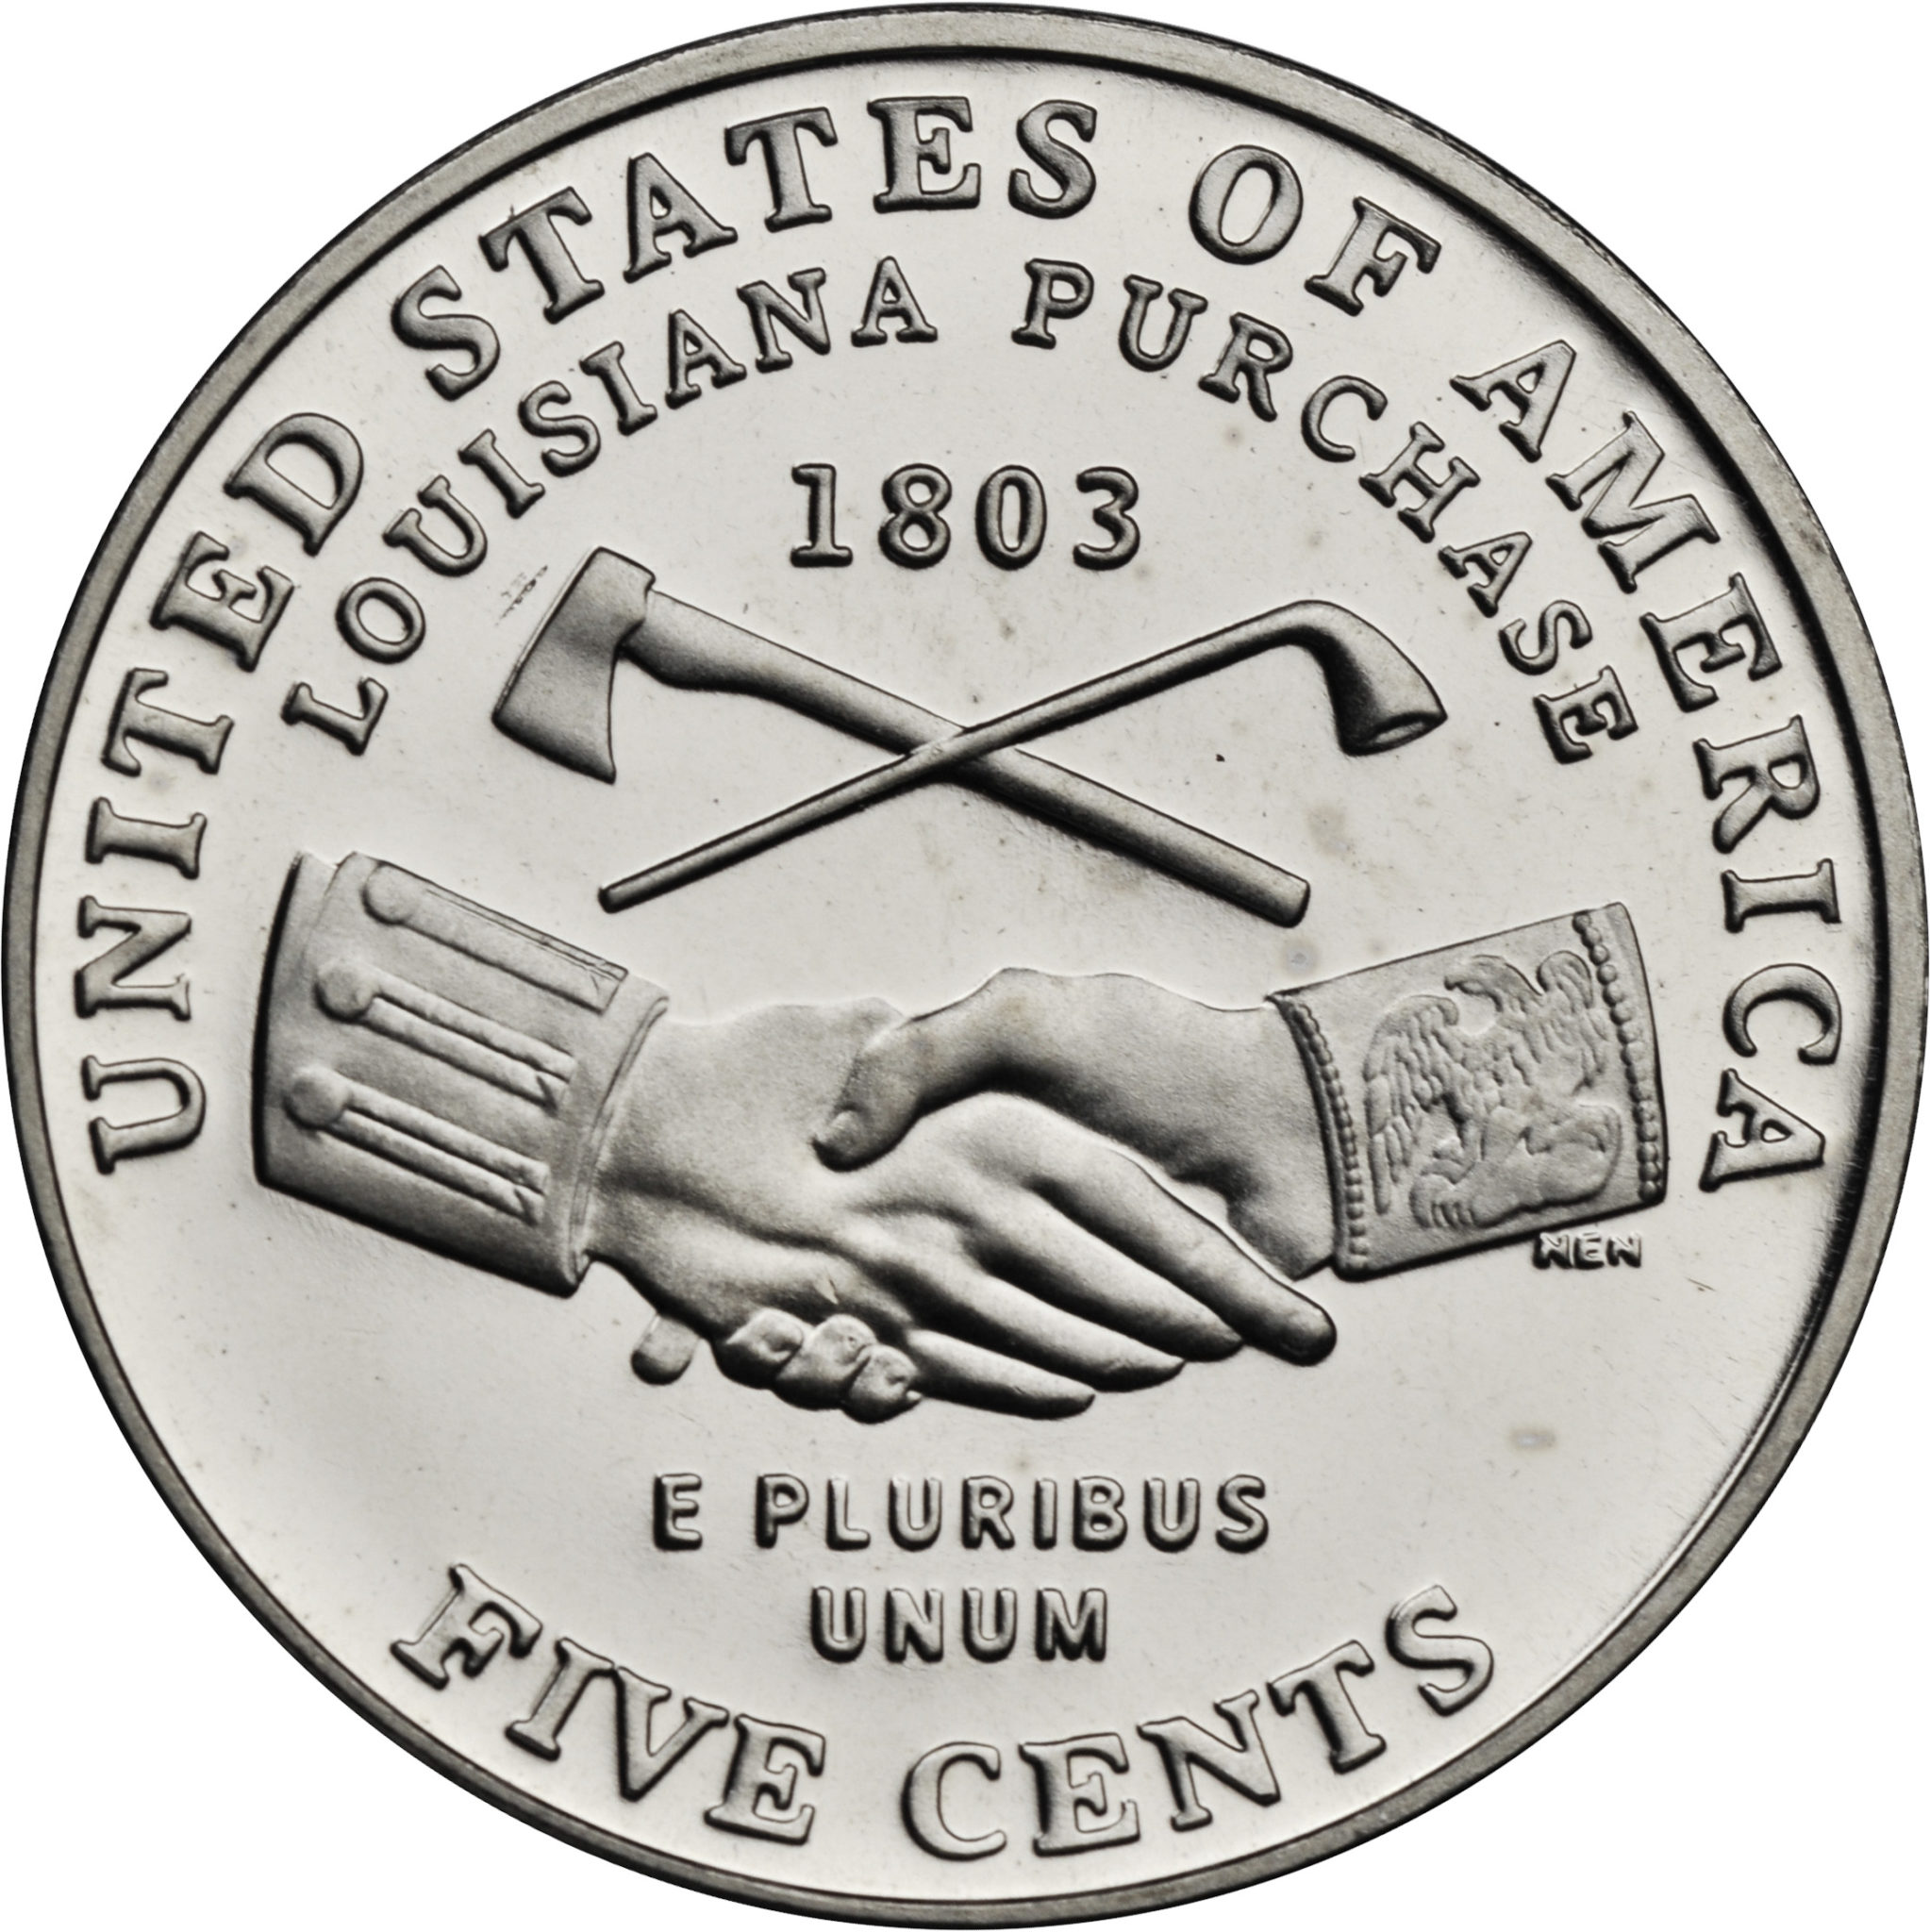 2004 liberty nickel